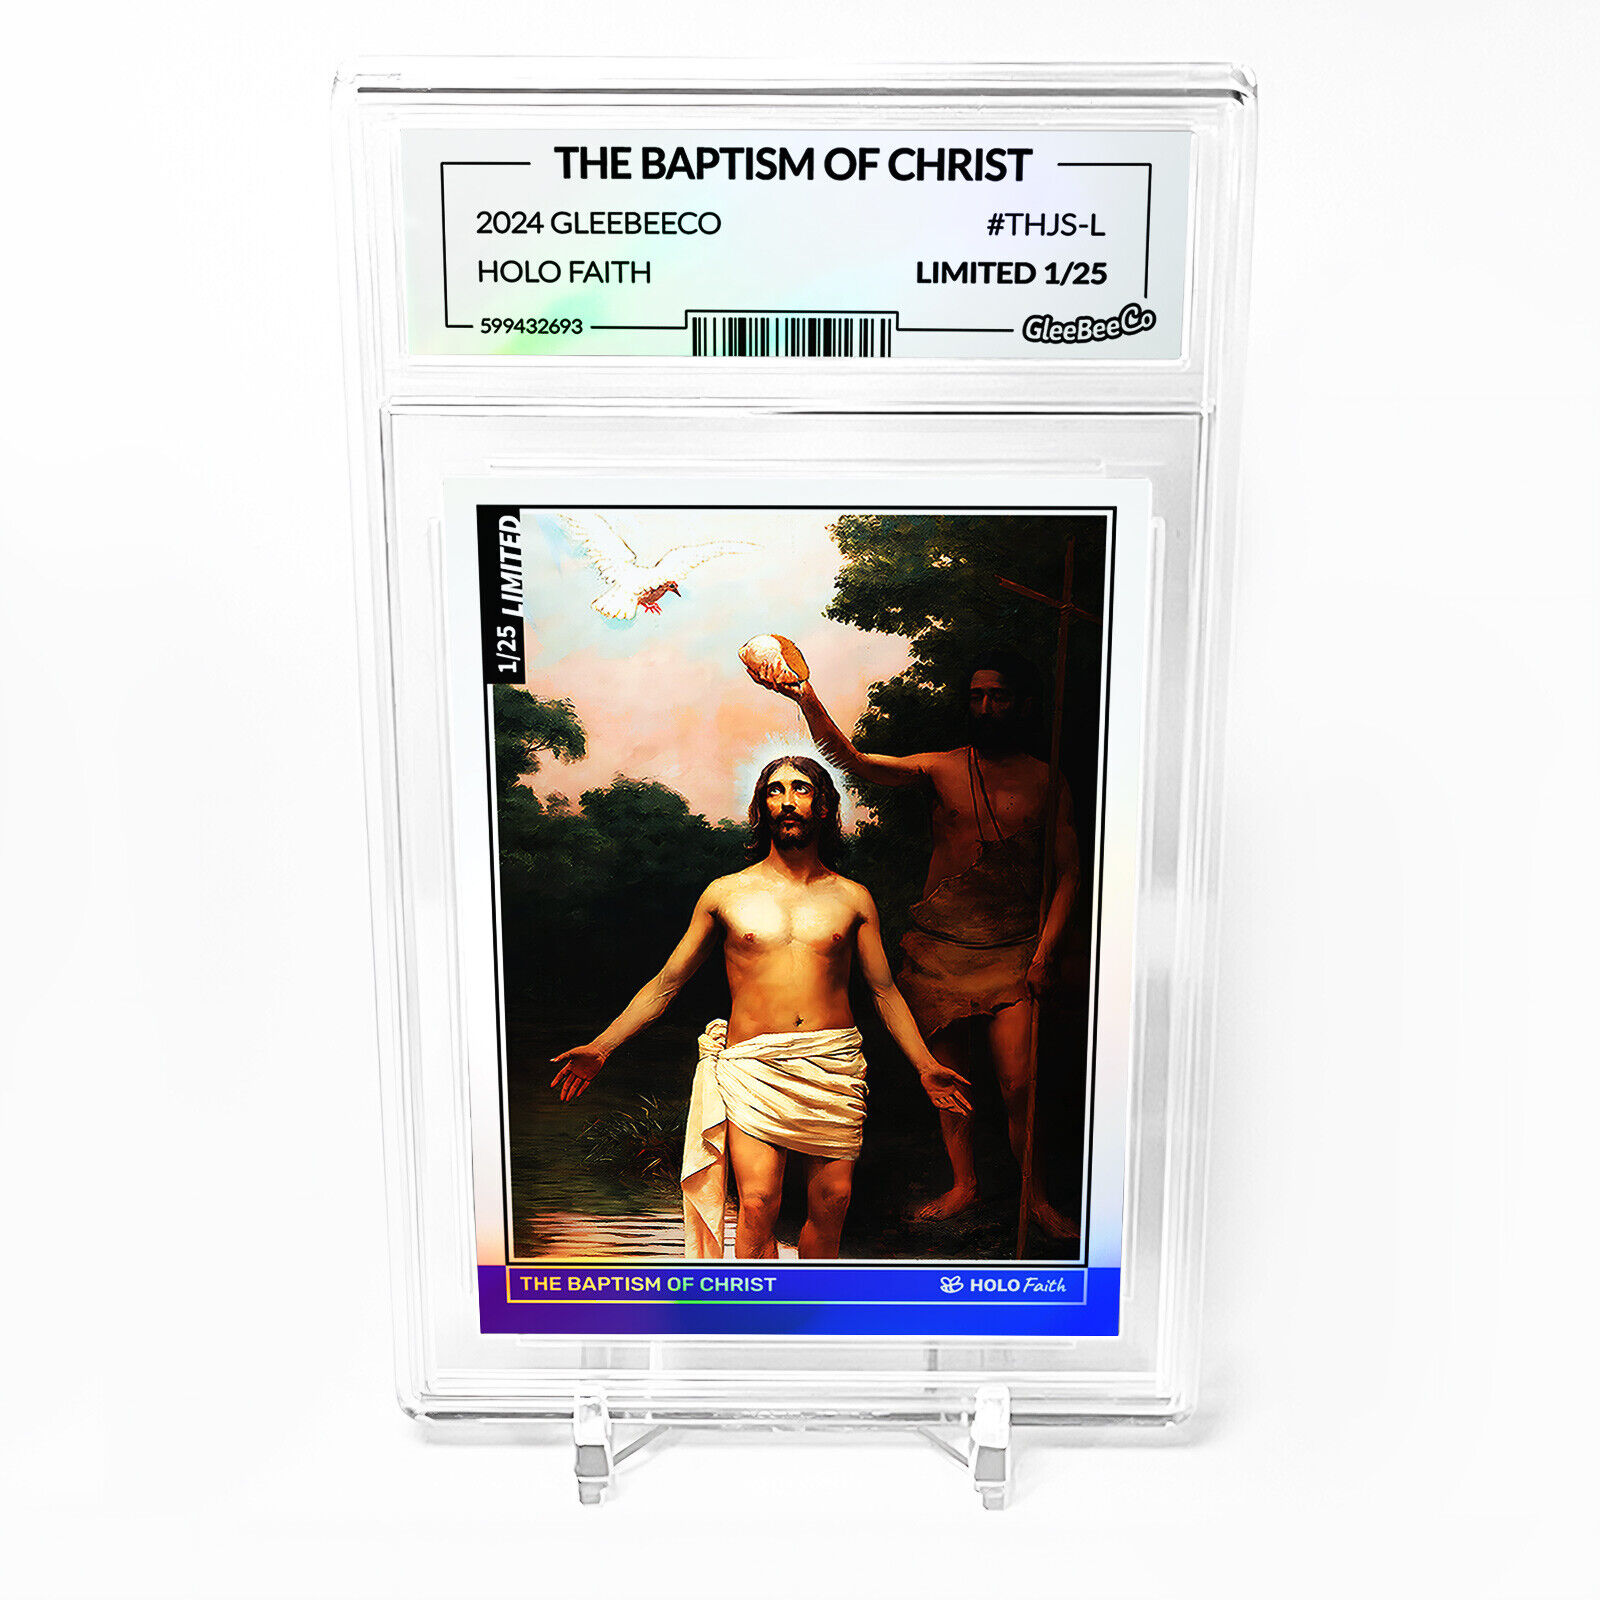 THE BAPTISM OF CHRIST Card 2024 GleeBeeCo Holo Faith (Jesus) #THJS-L /25 Made